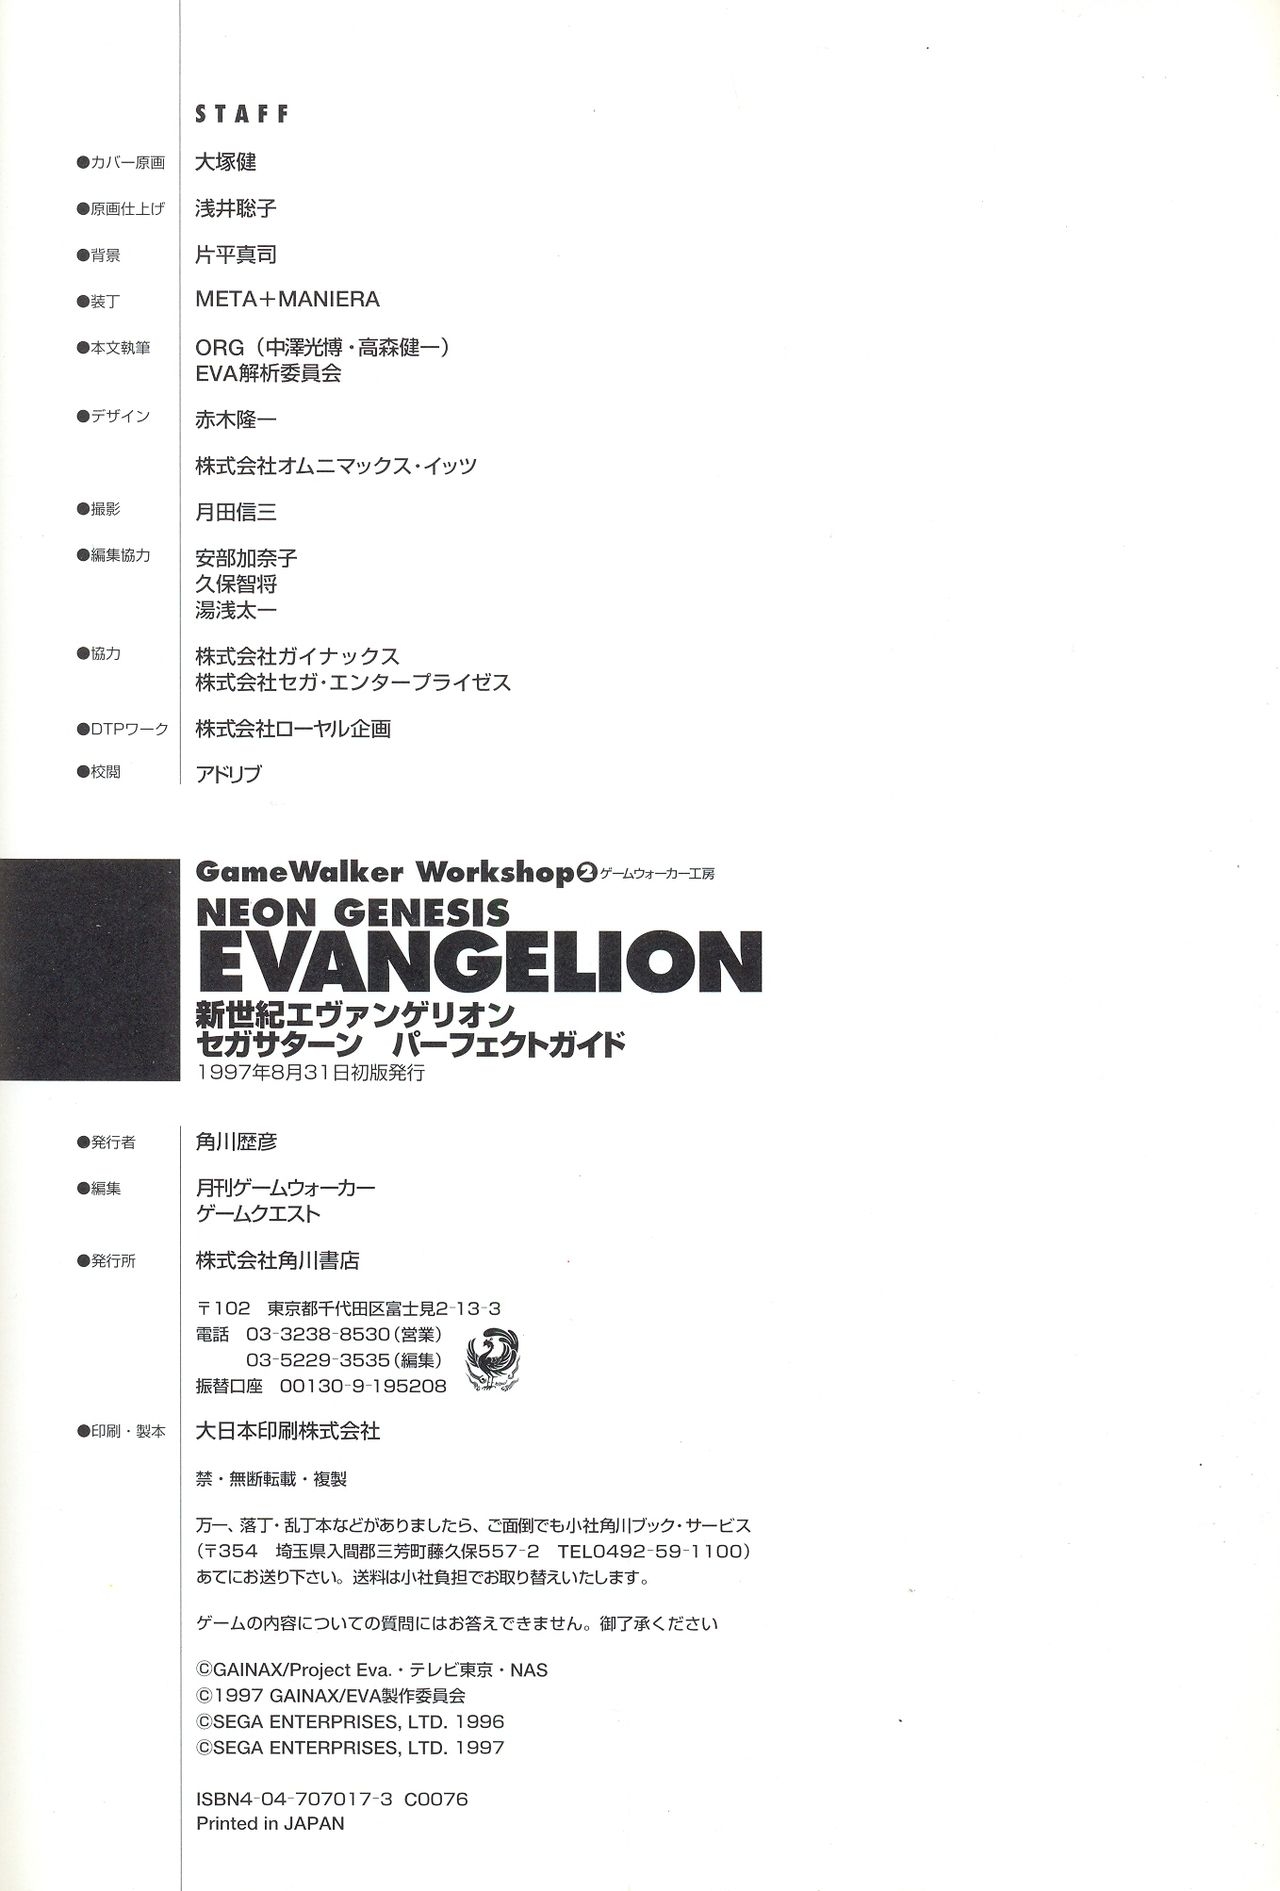 Neon Genesis Evangelion - 2nd Impression Sega Saturn Perfect Guide 175